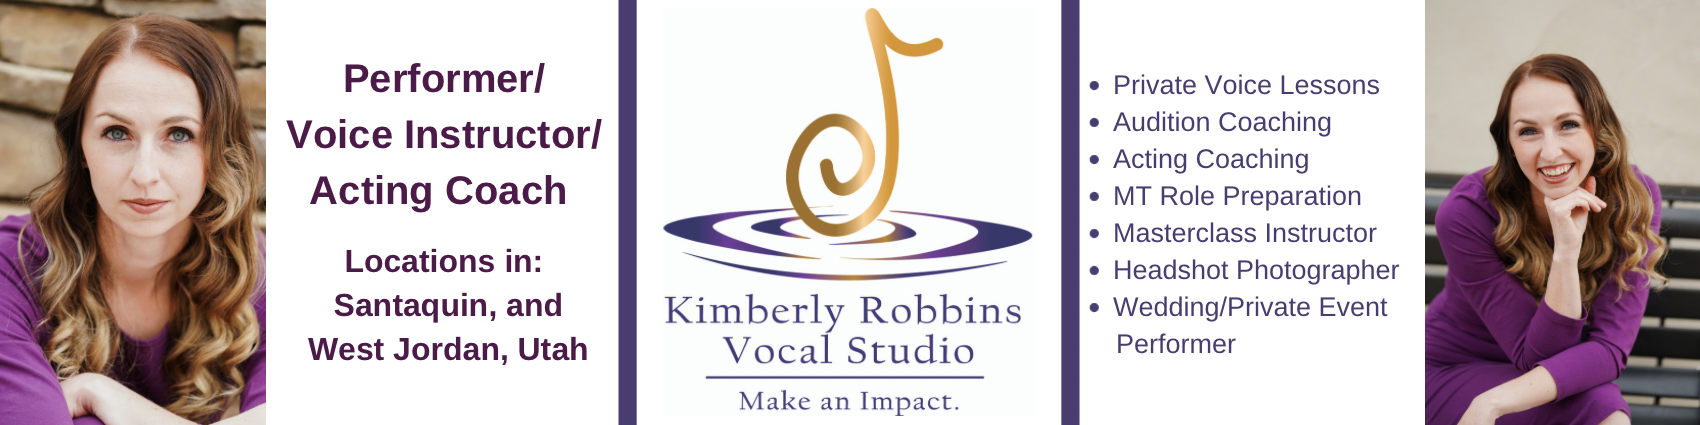 Kimberly Robbins Vocal Studio